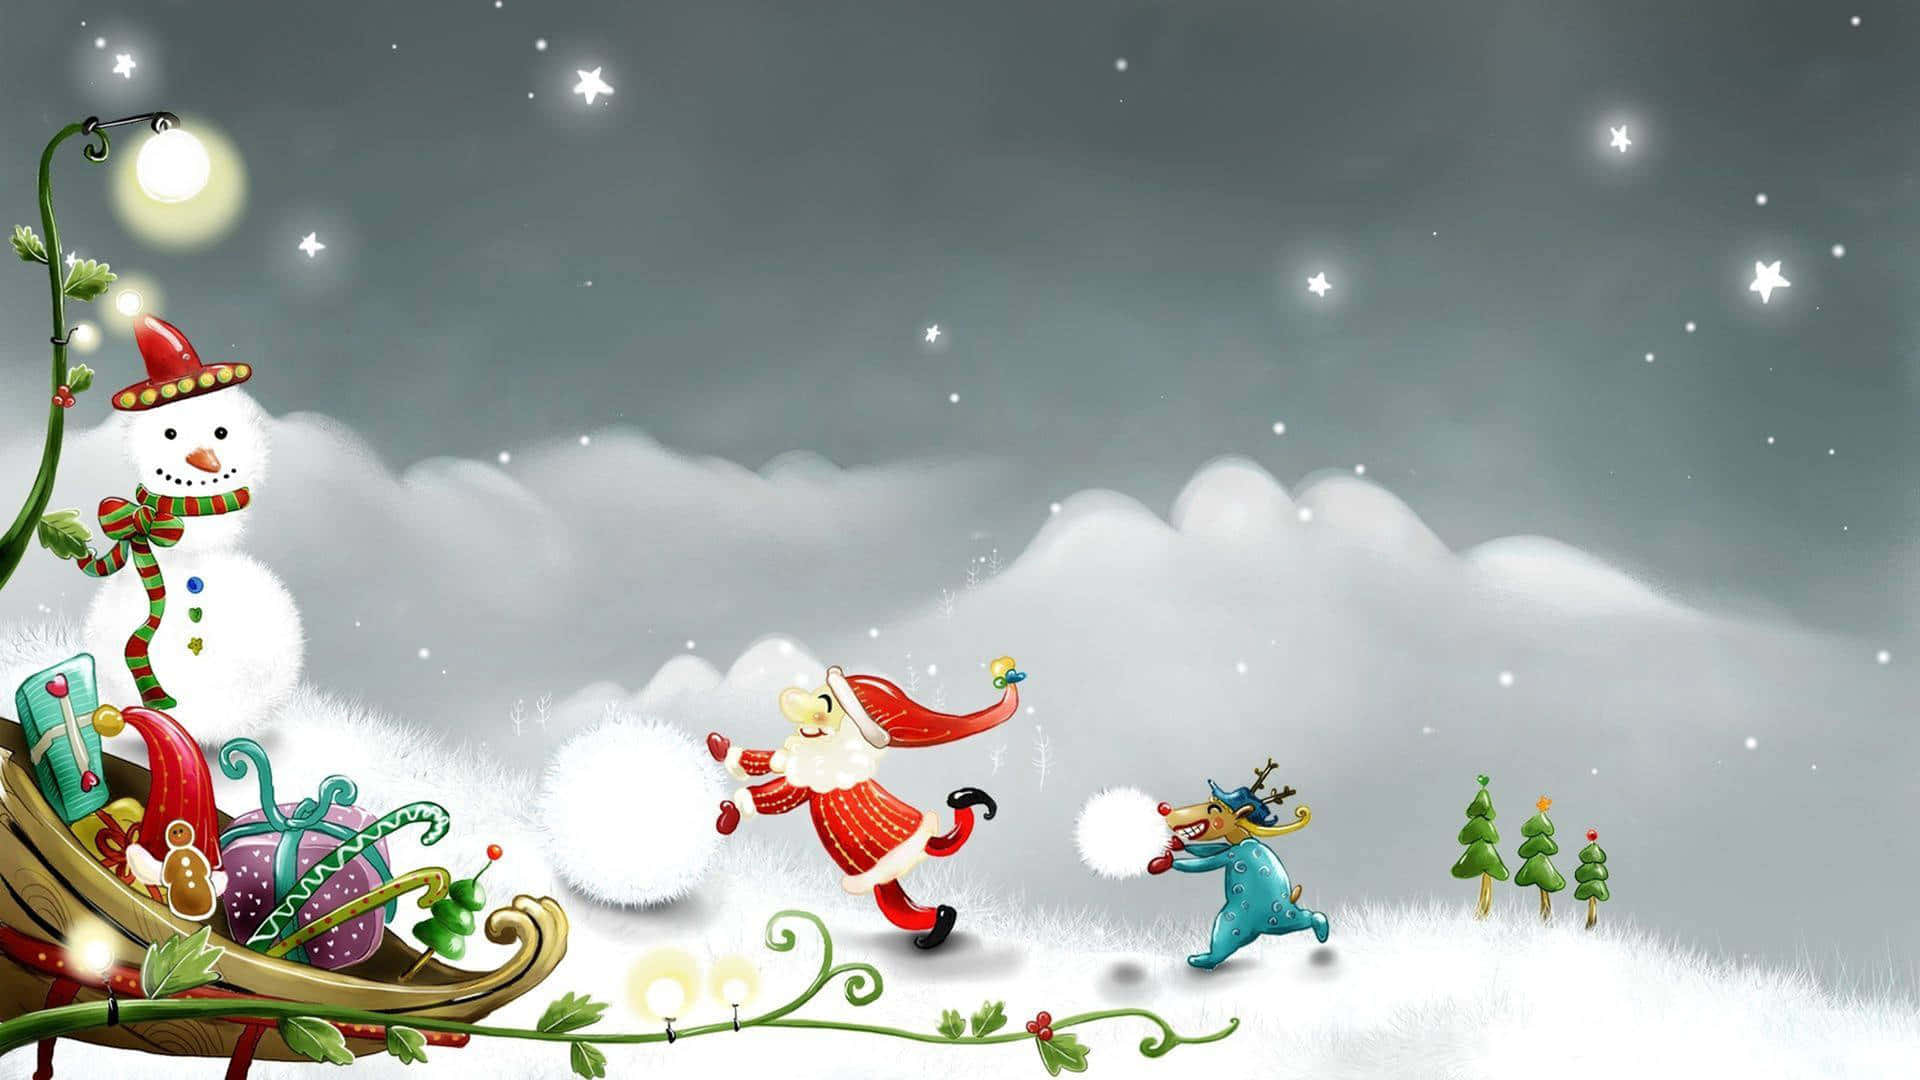 Enjoy the festive season in this beautiful Christmas Winter Wonderland Wallpaper